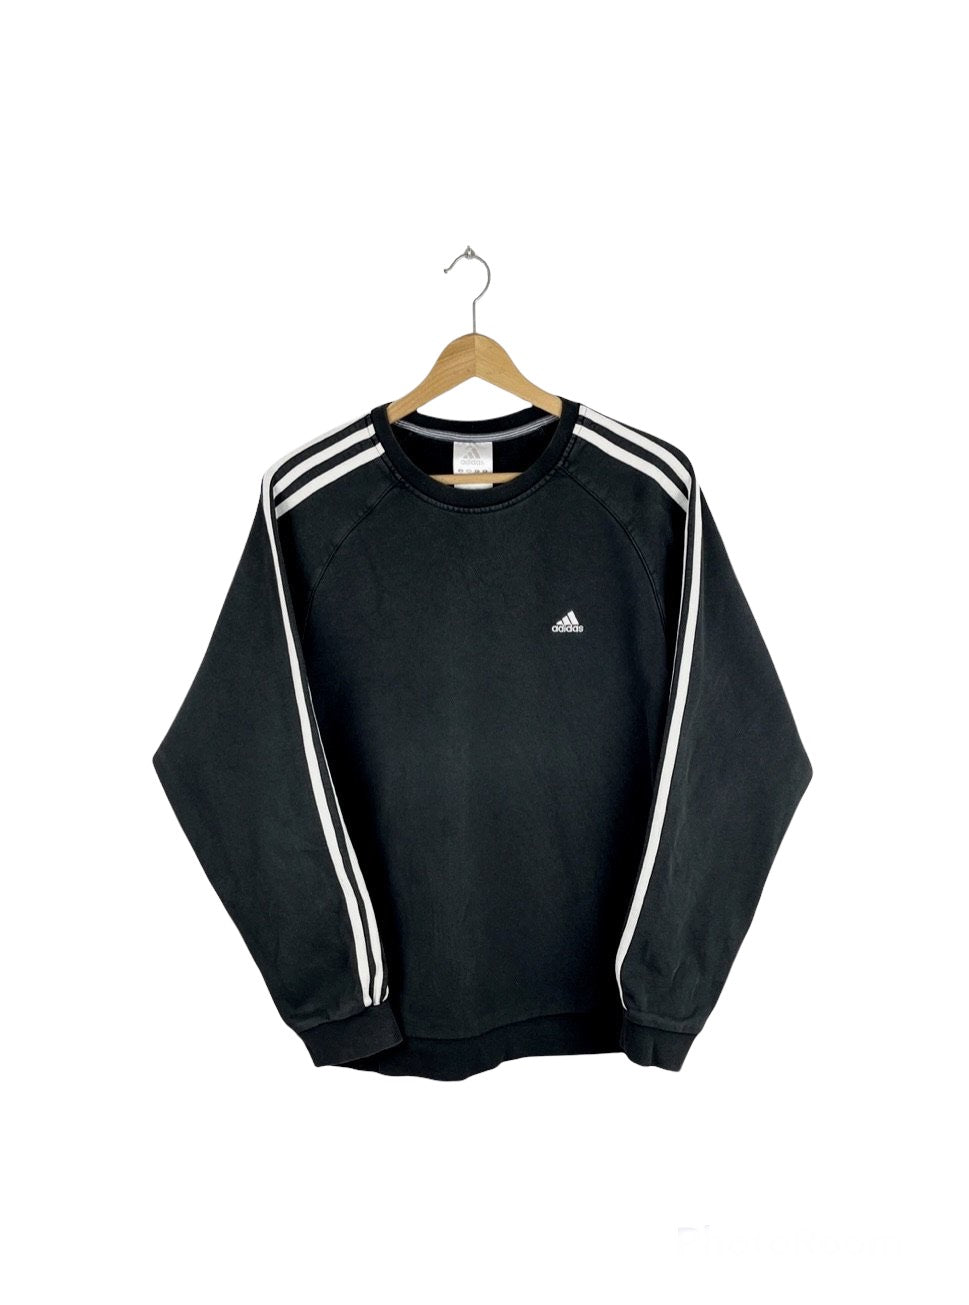 Adidas Sweatshirt - XLarge